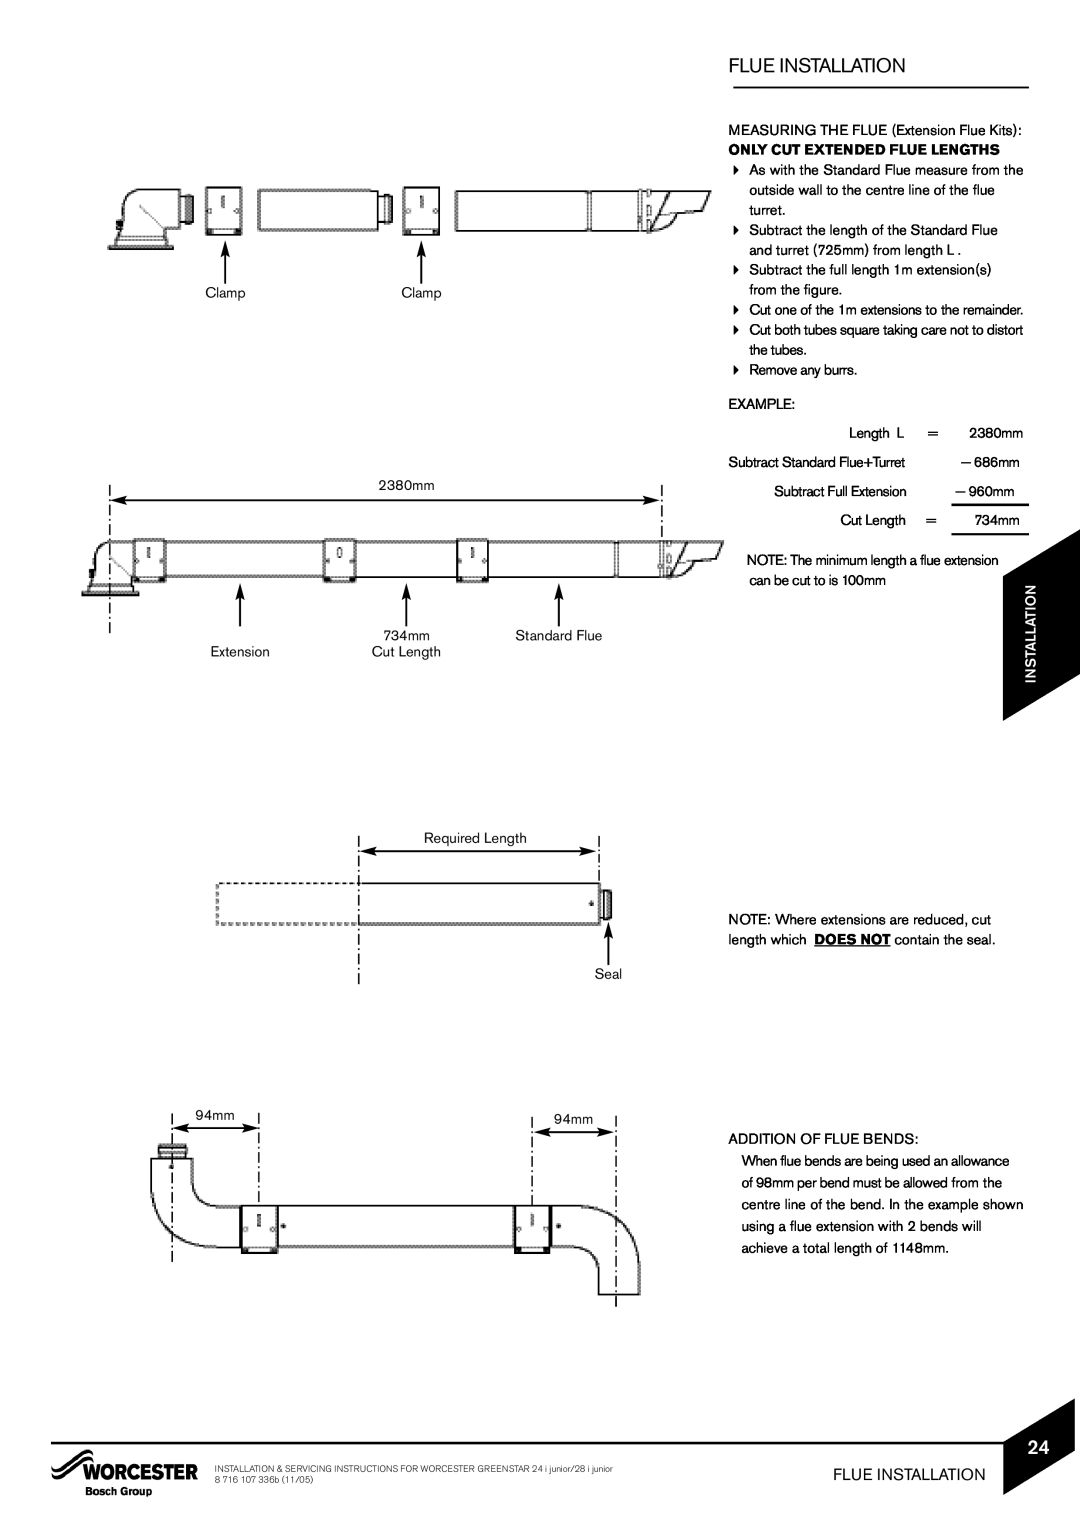 Bosch Appliances 24i junior manual Flue Installation, Only Cut Extended Flue Lengths, Standard Flue, Cut Length, Example 